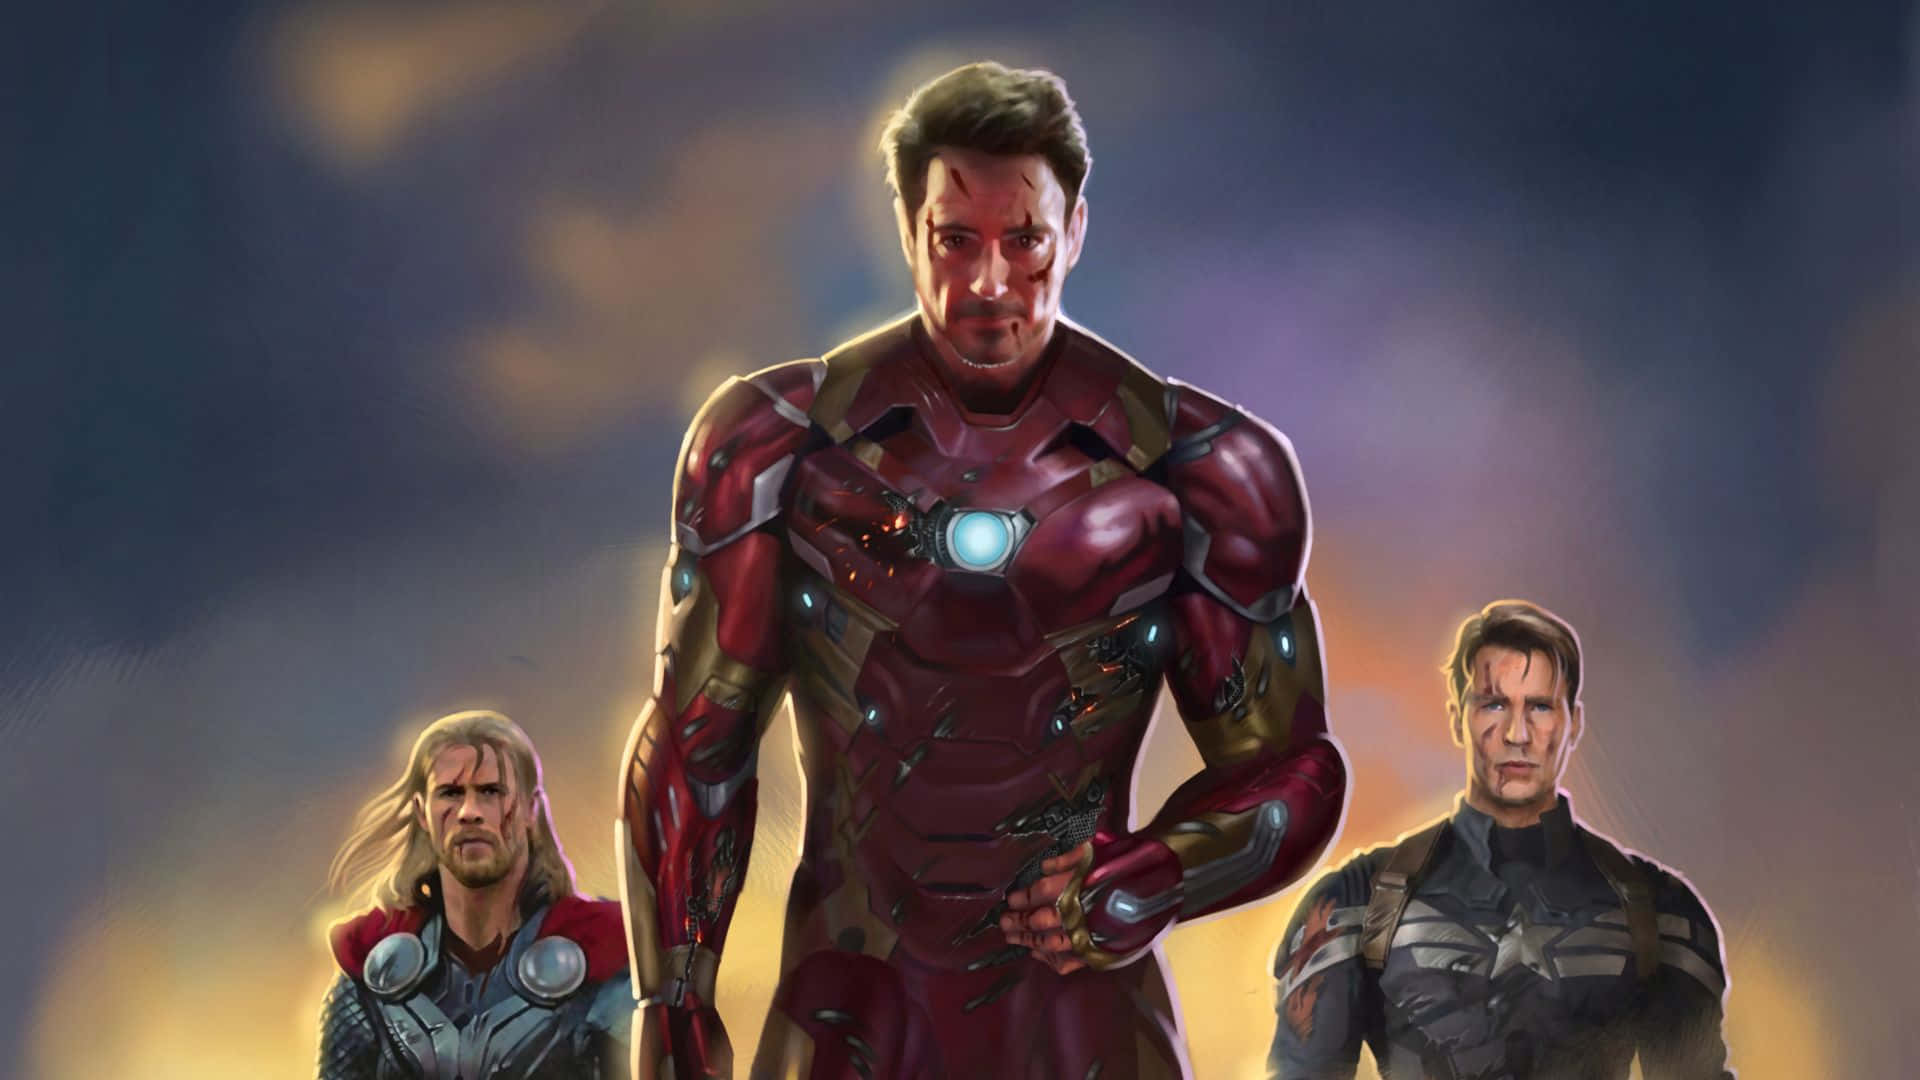 Tony Stark Blasting Off in the Iron Man Suit Wallpaper